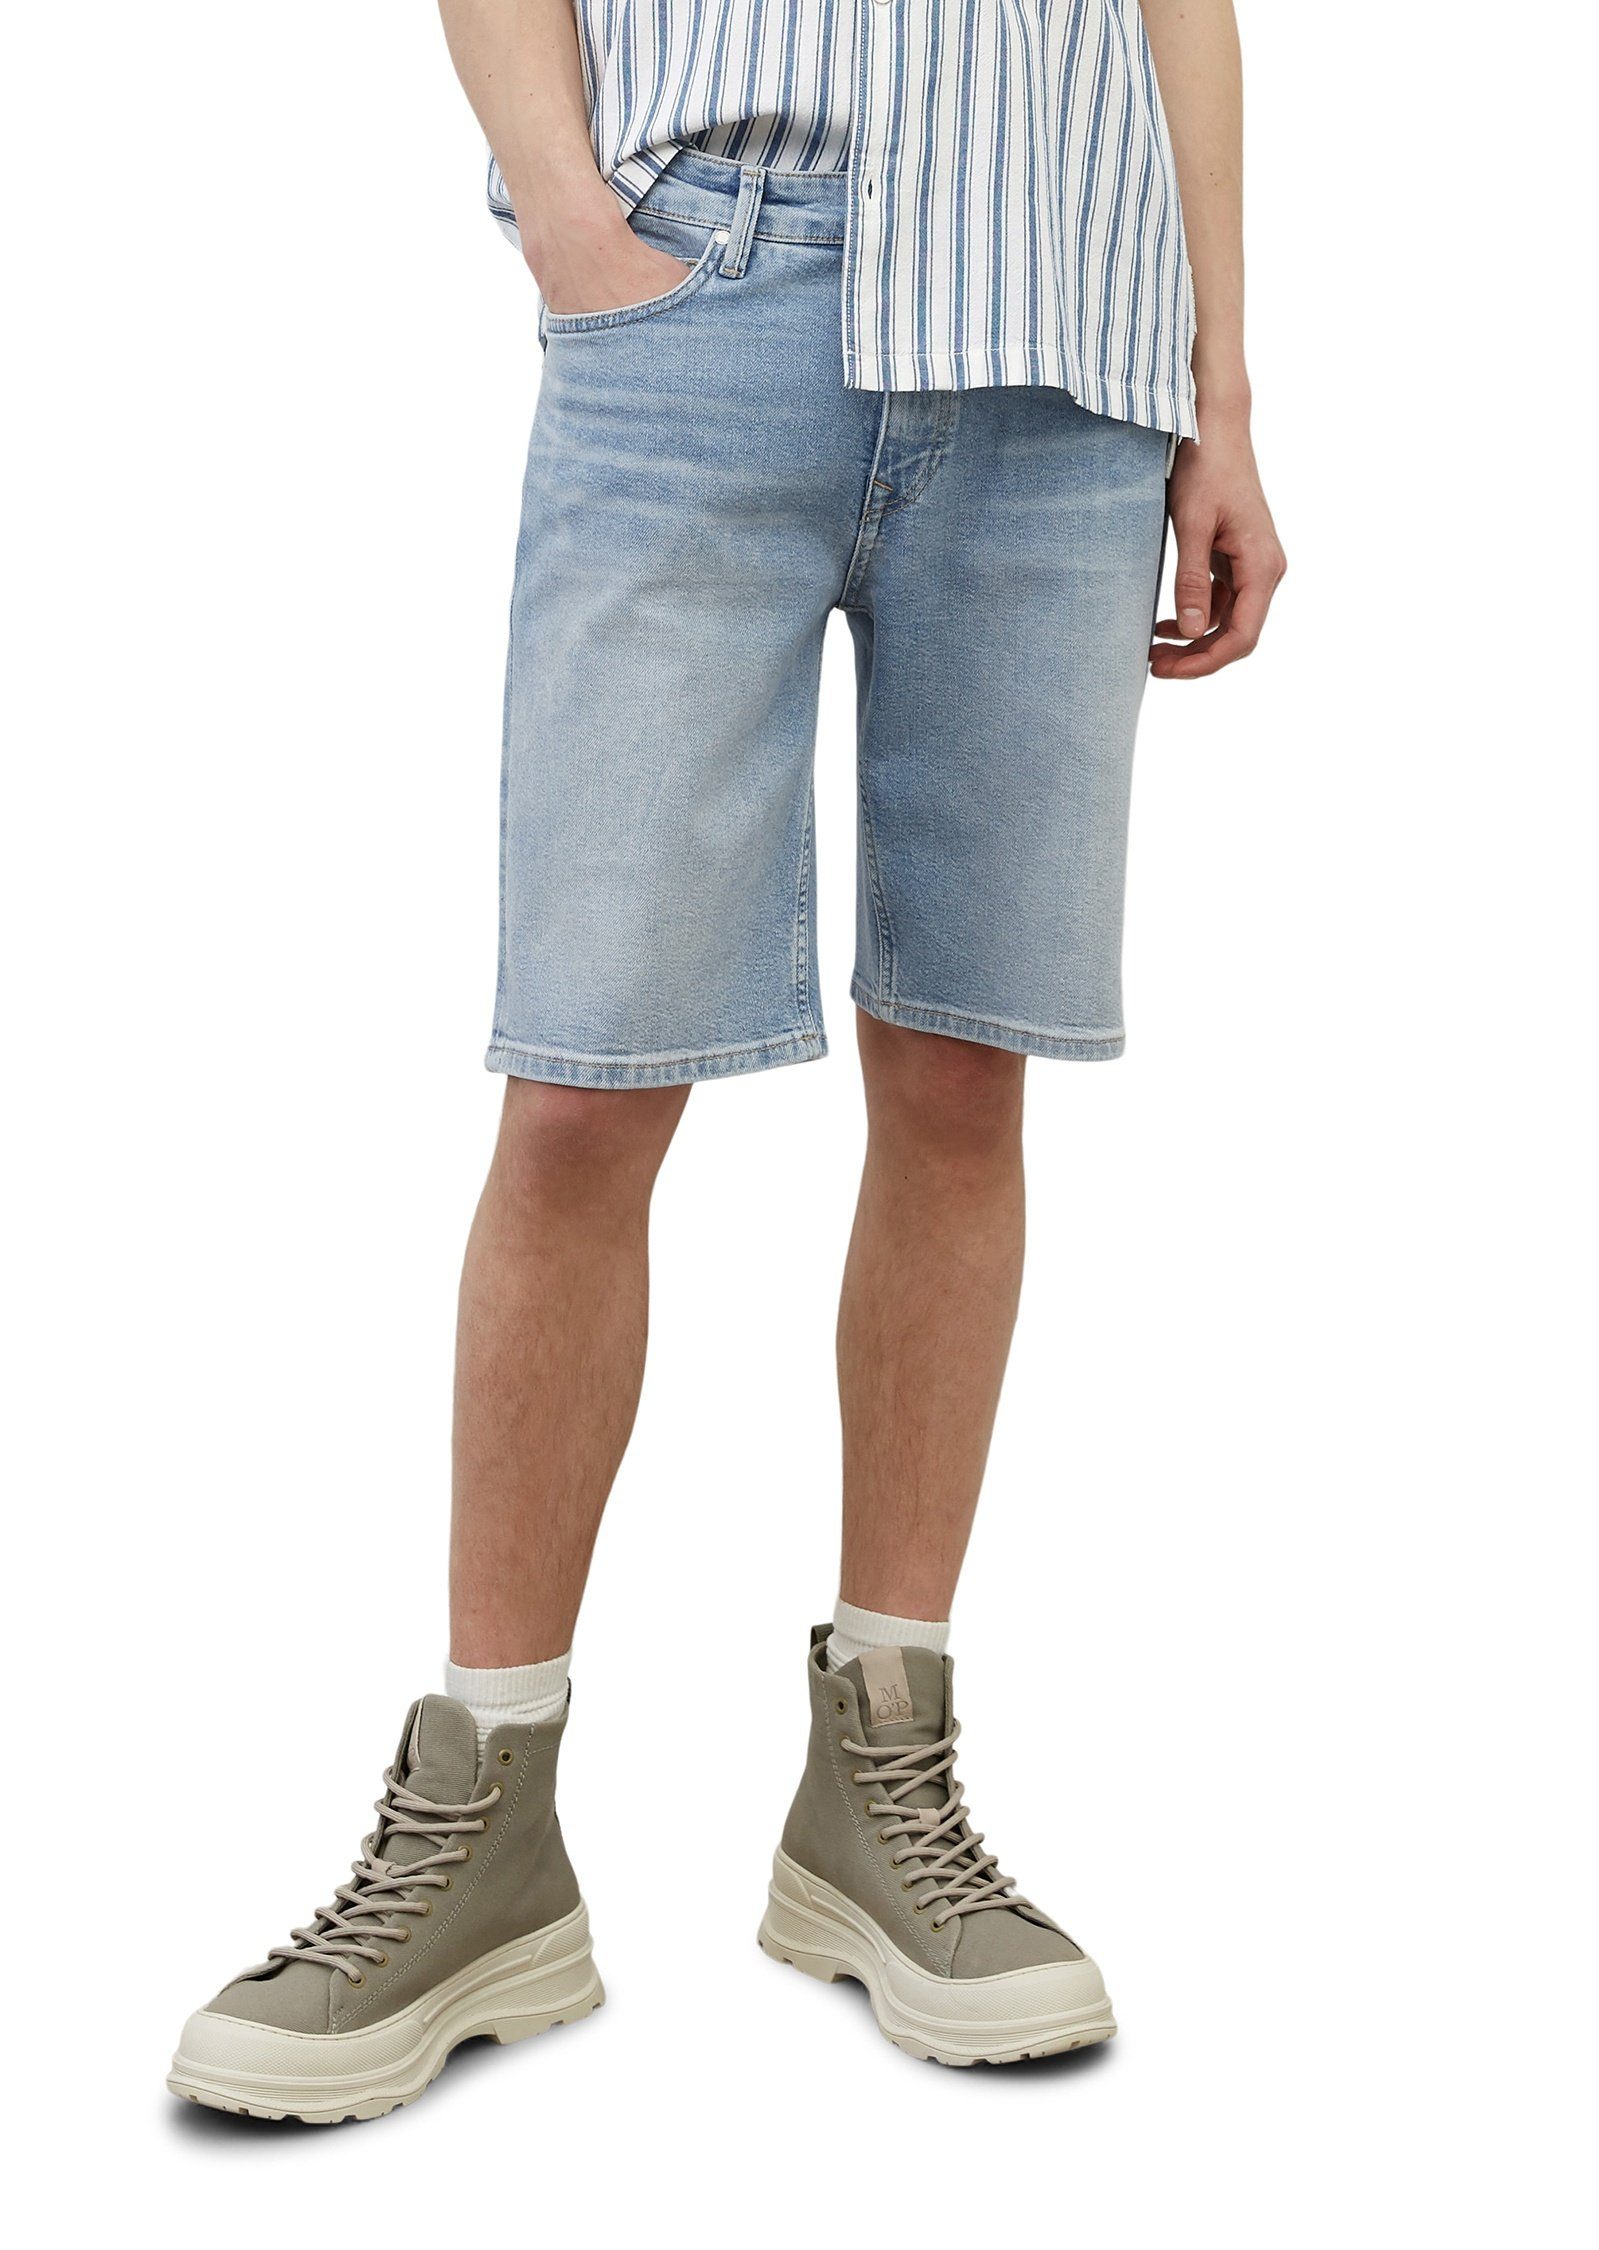 O'Polo Shorts Marc aus hellblau Authentic-Stretch-Denim-Qualität